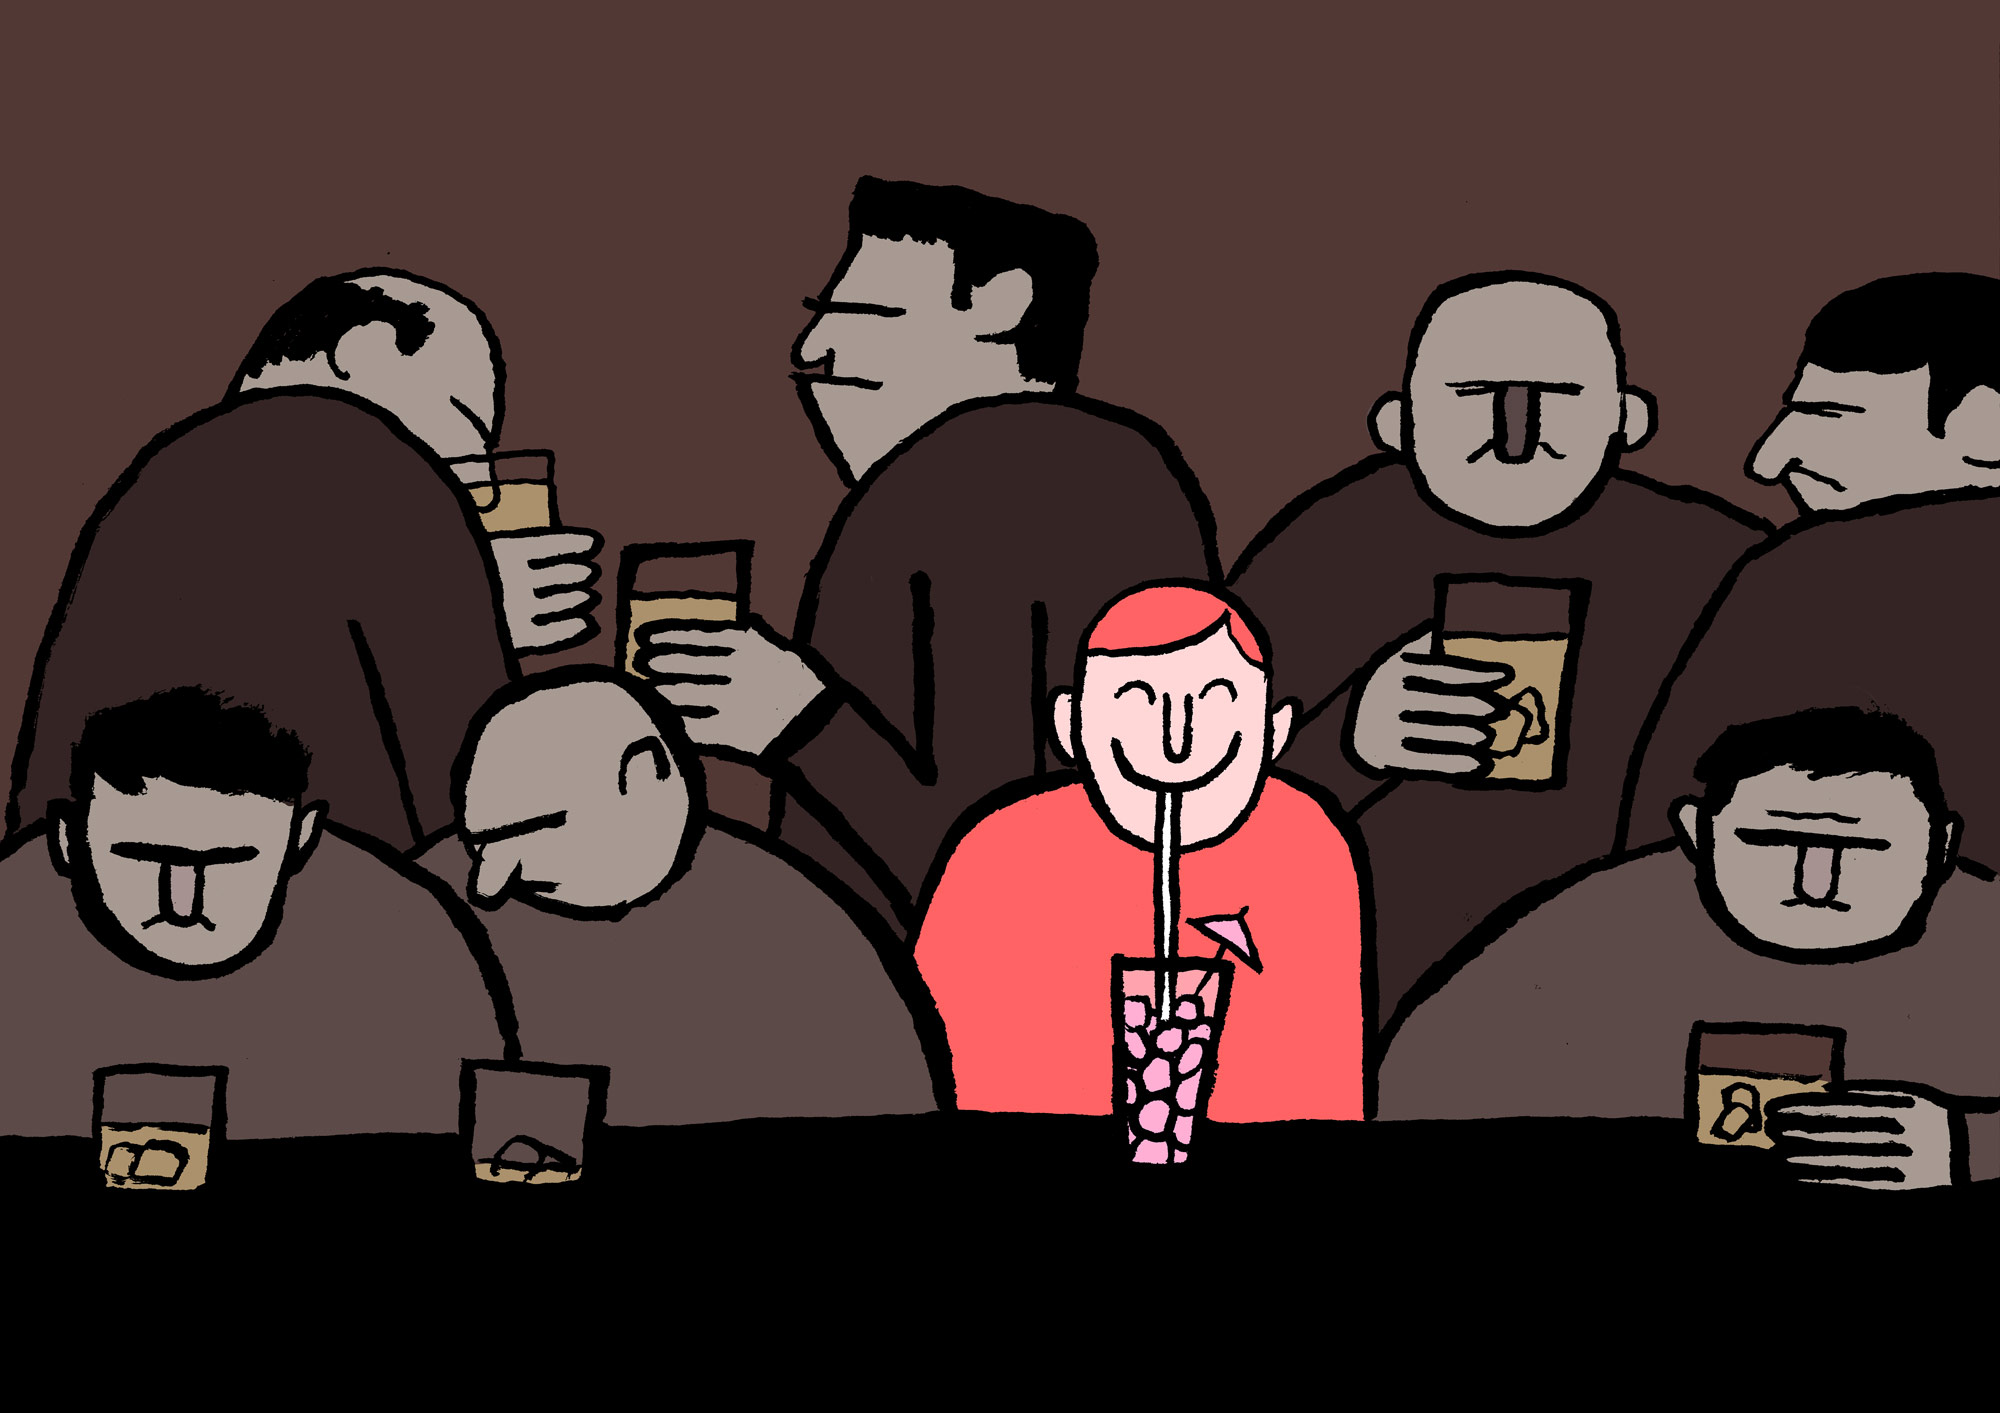 Happy Hour: A bar scene